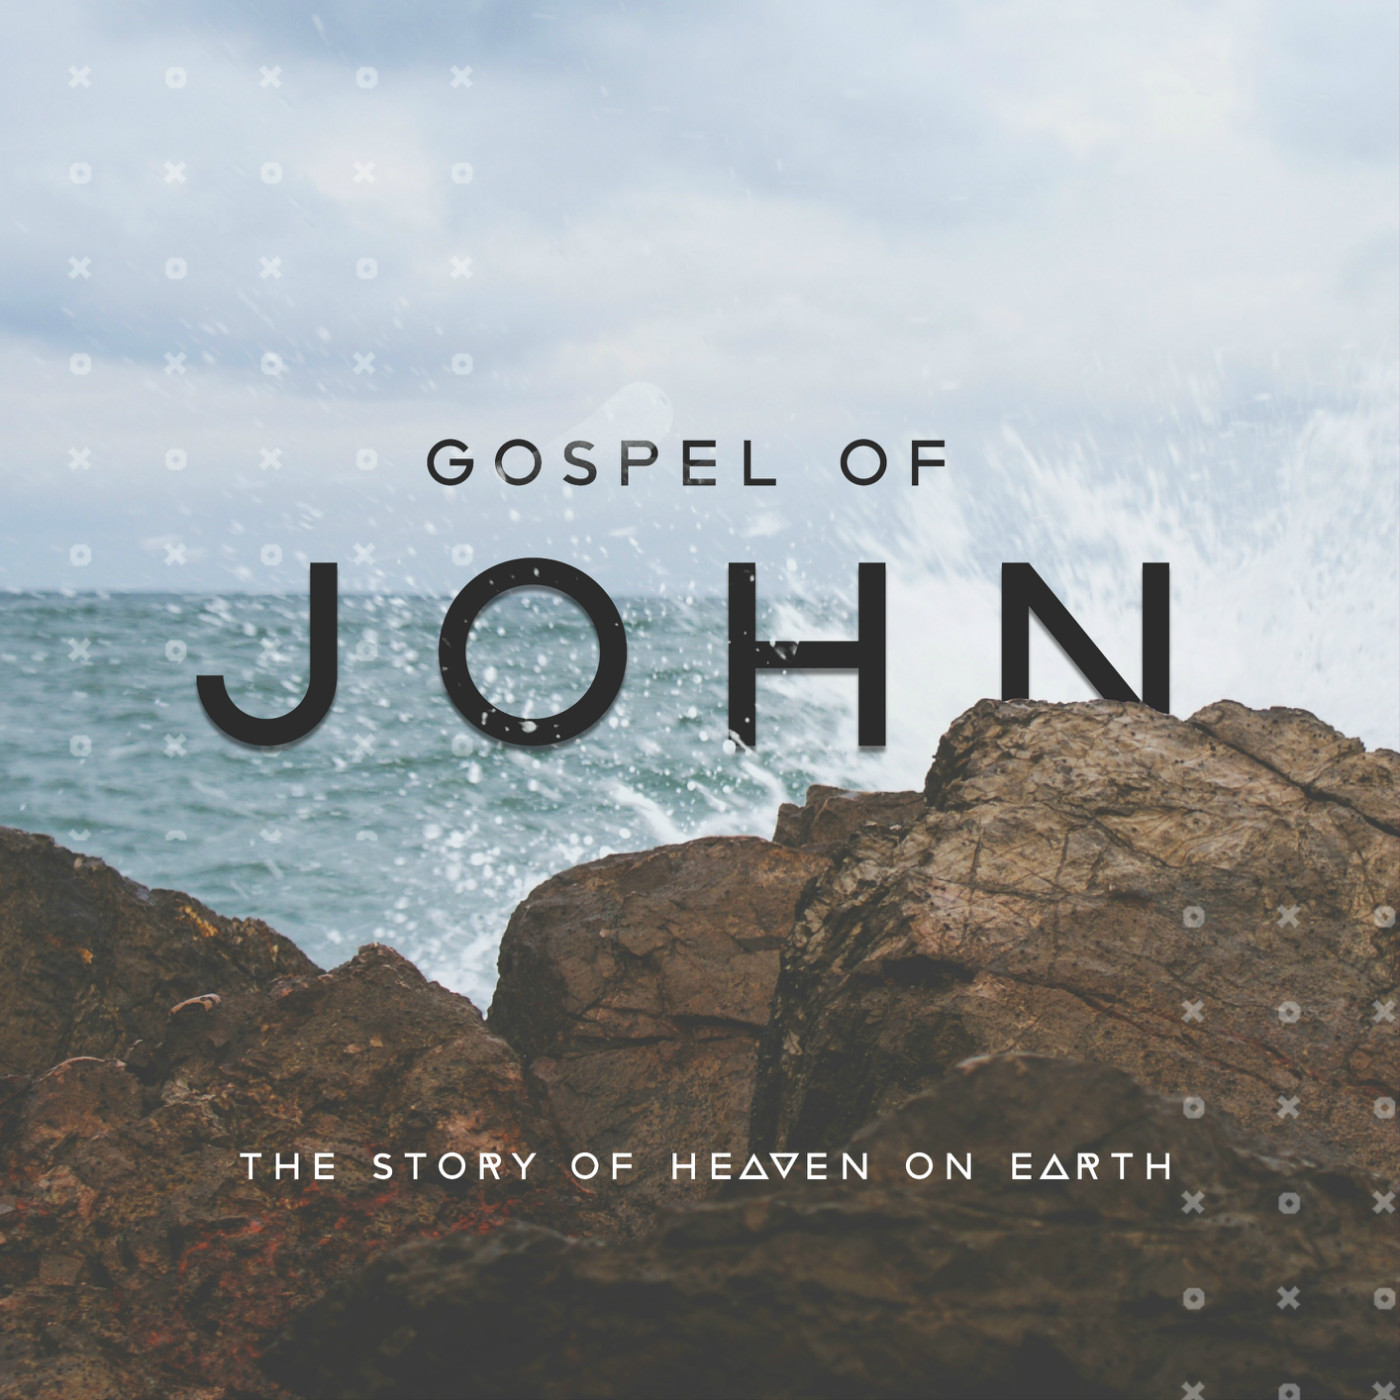 The Gospel of John Series: ”Resurrected Life” Part 24